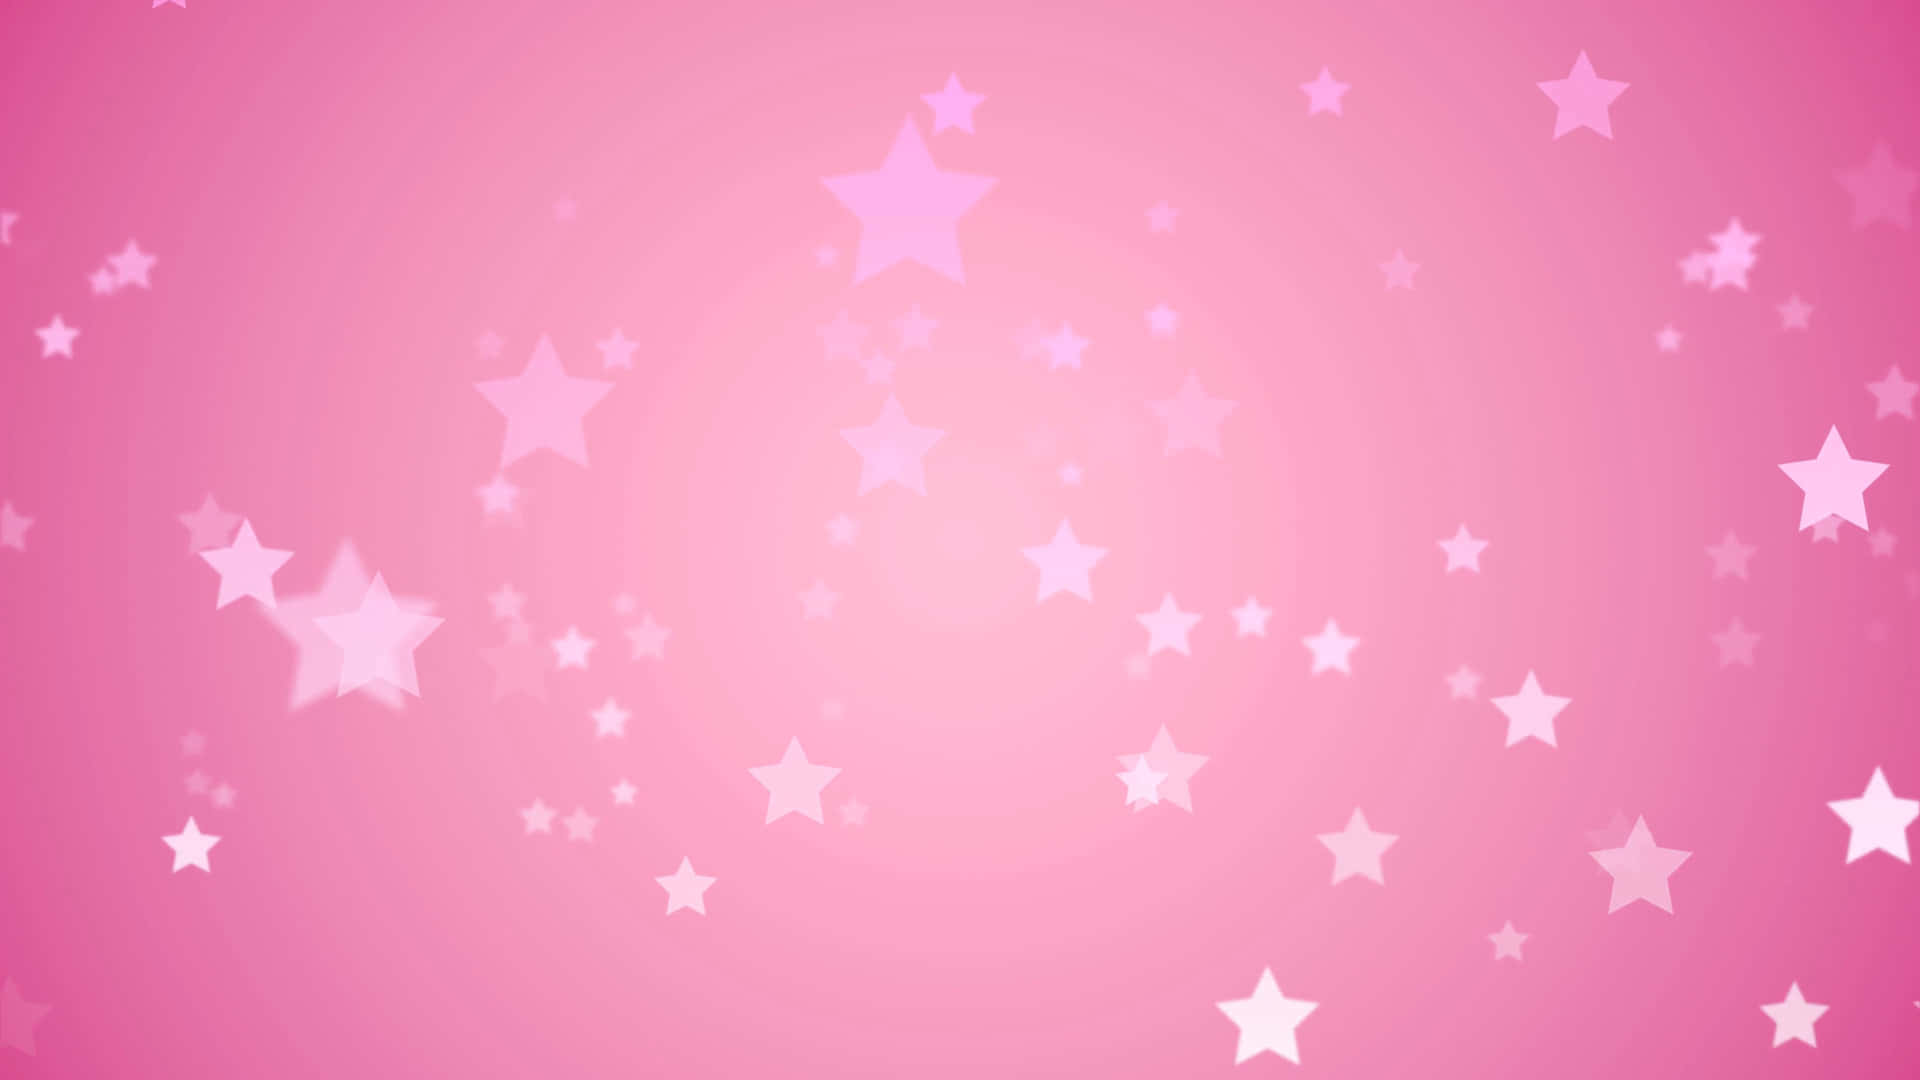 A beautiful Pink Star illuminating the night